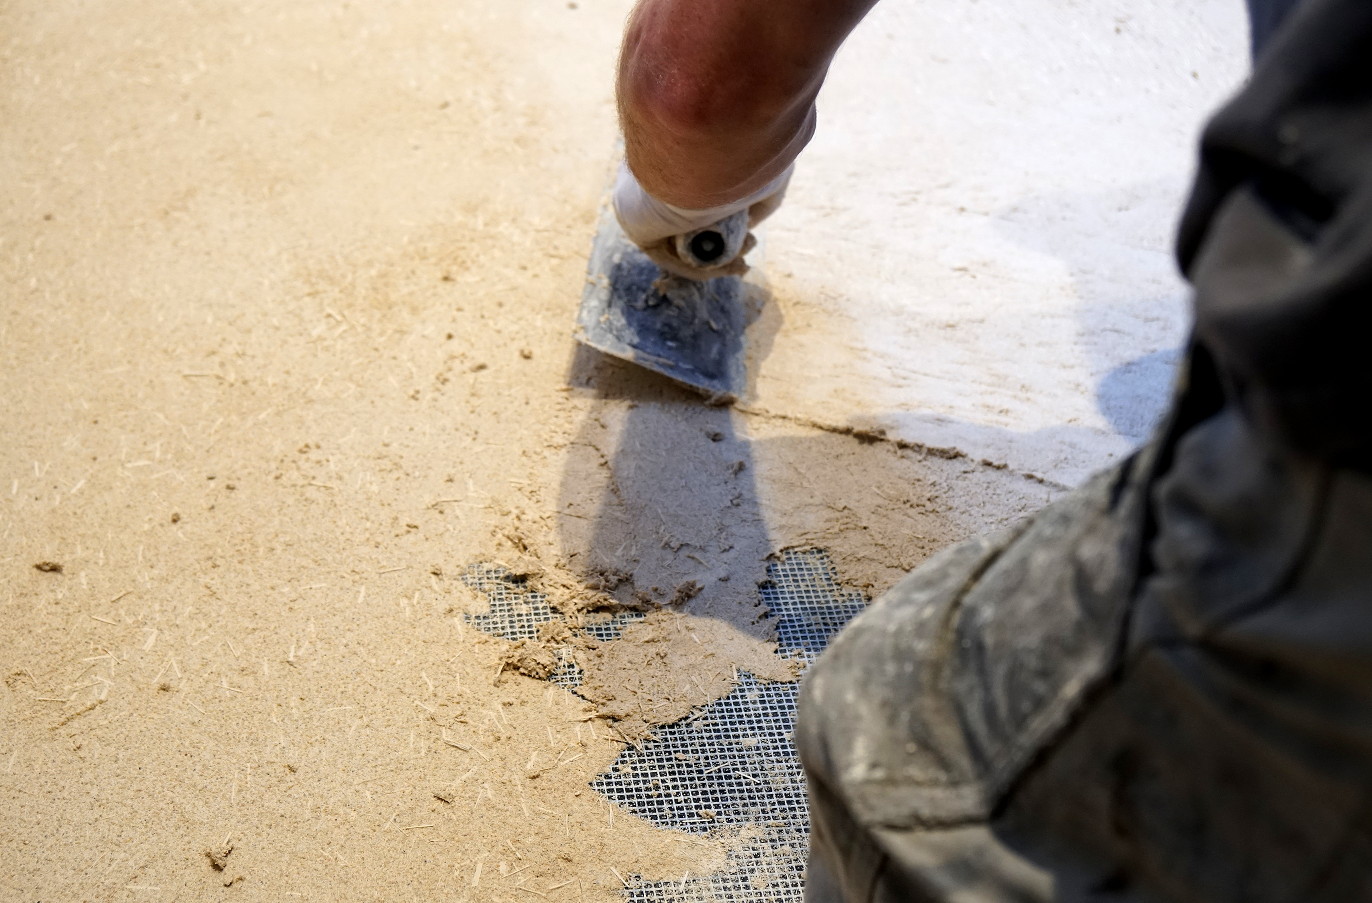 Hand troweled concrete scratch coat on floor